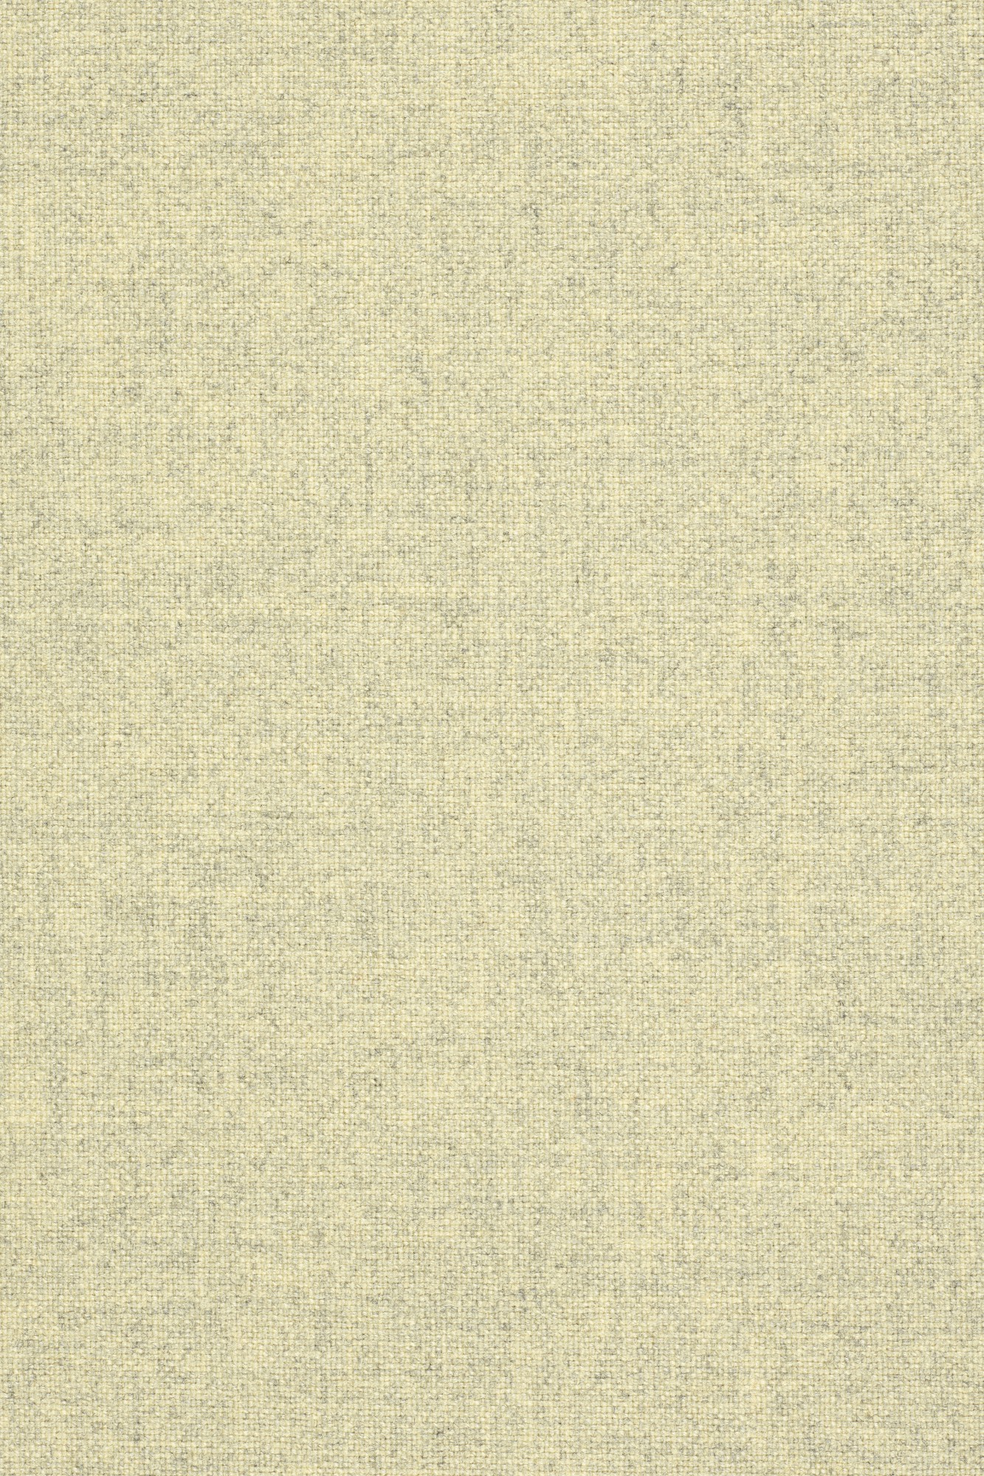 Fabric sample Tonica 2 223 white